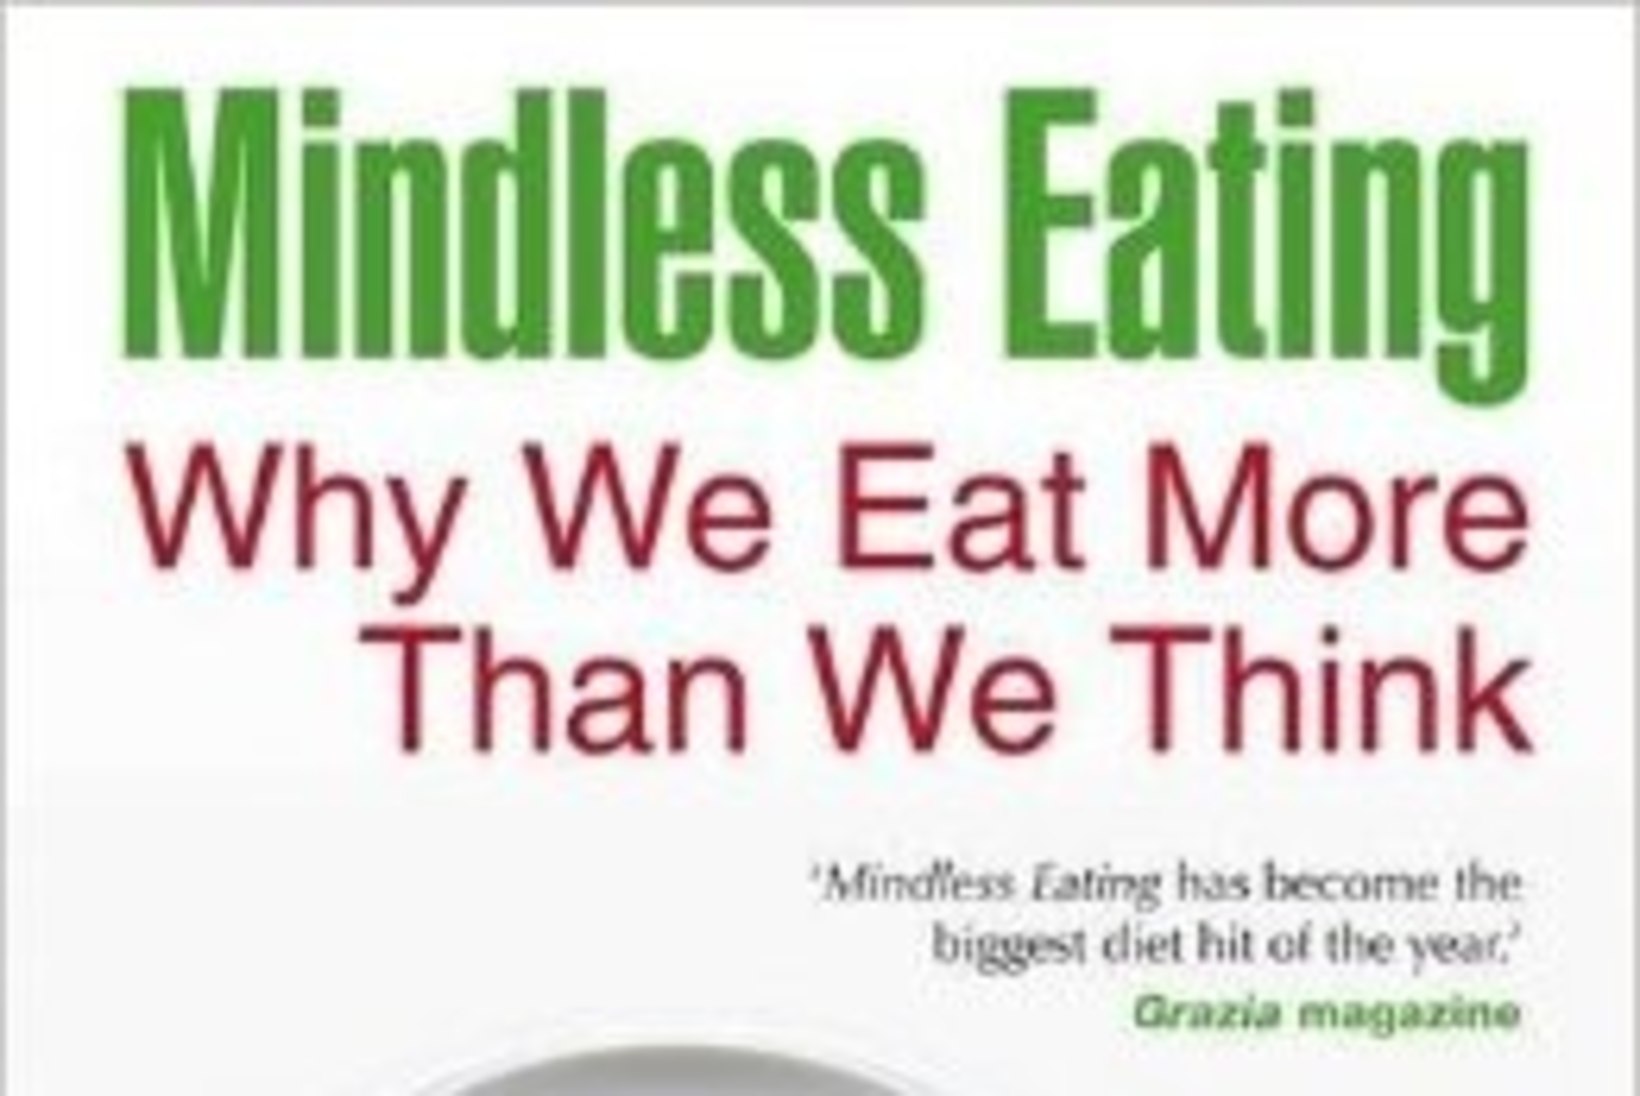 Viis tarkusetera Brian Wansinki teosest ”Mindless Eating”